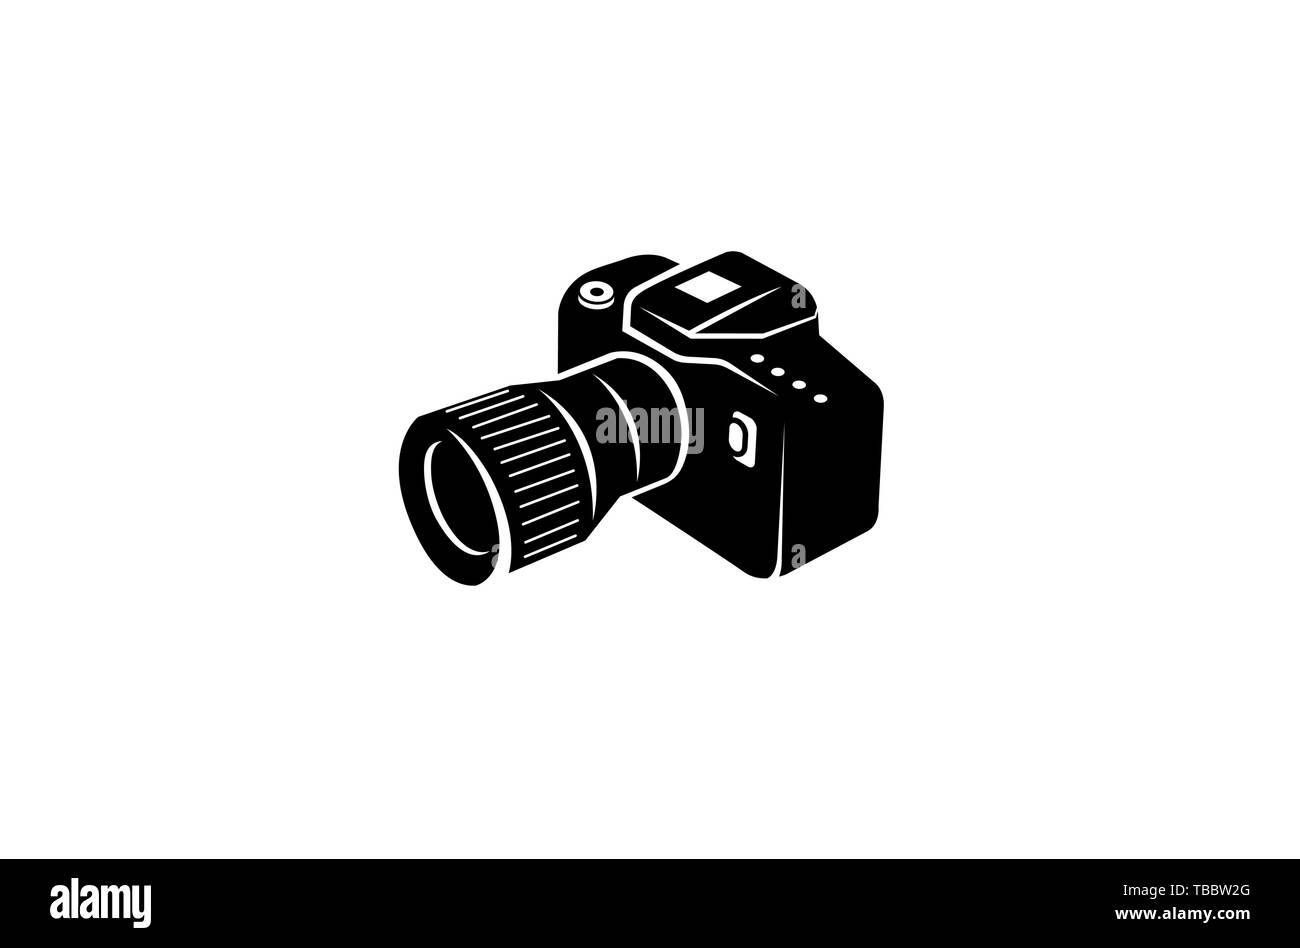 dslr camera logo white